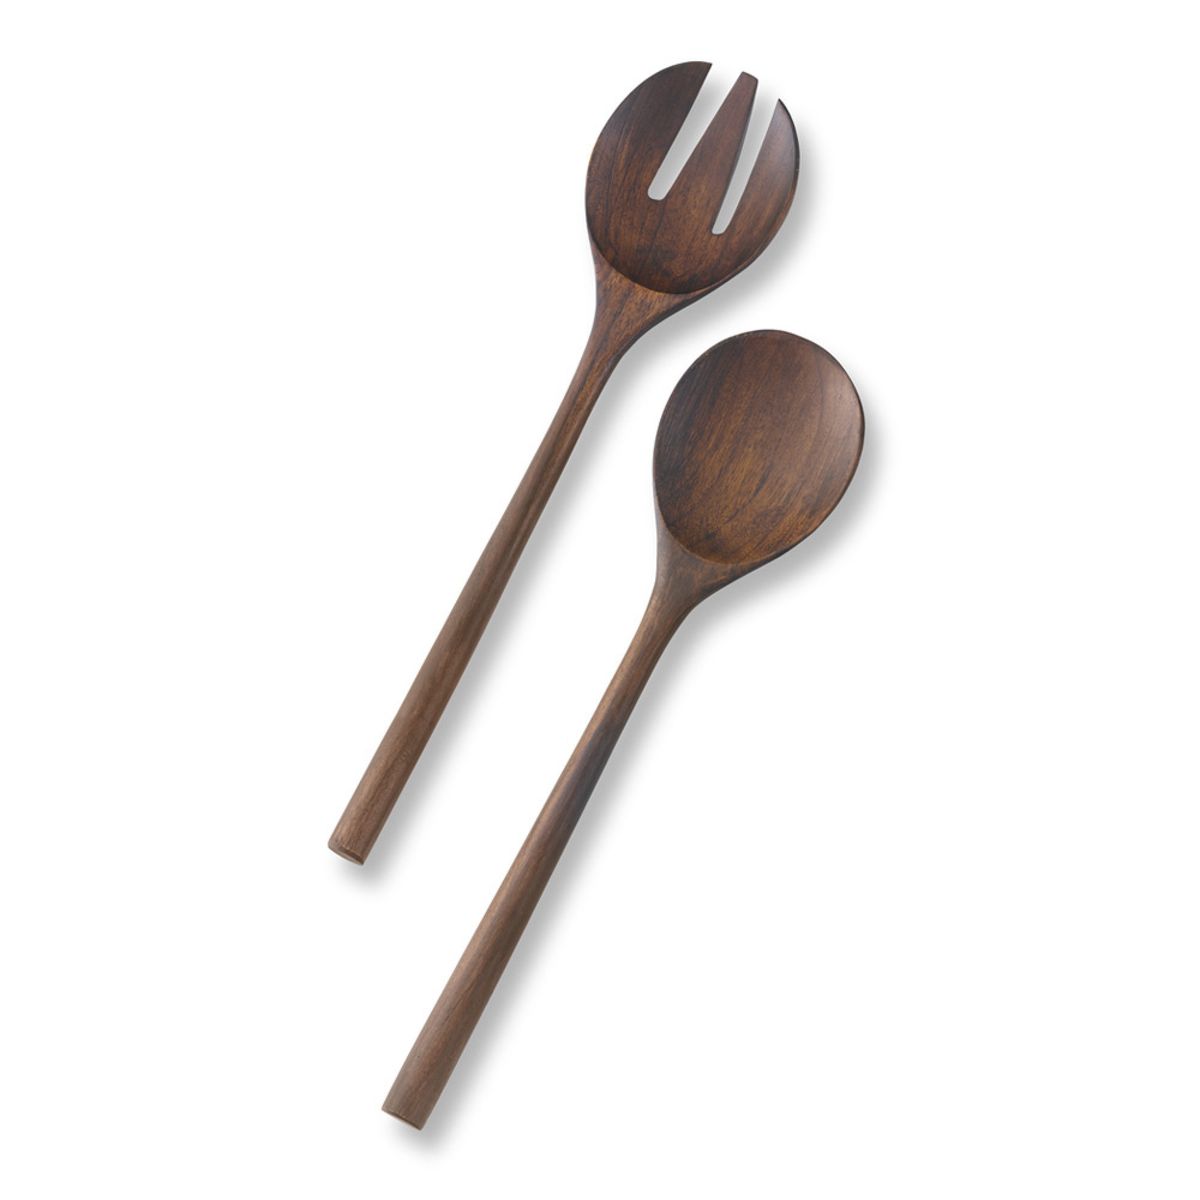 Wood serving utensils